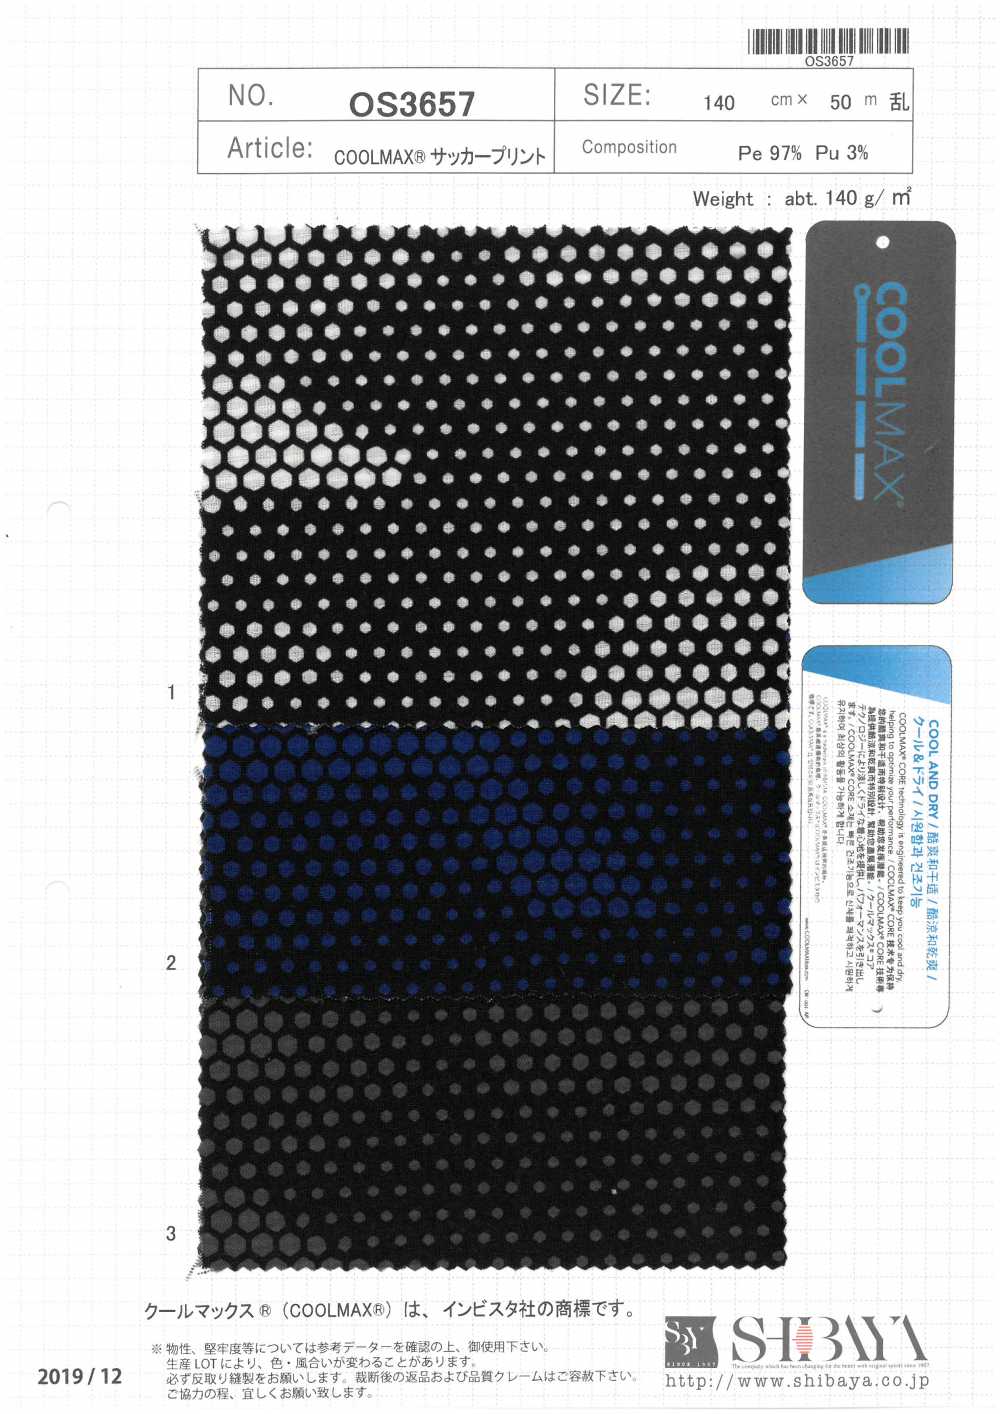 OS3657 COOLMAX® Seersucker Print[Textile / Fabric] SHIBAYA